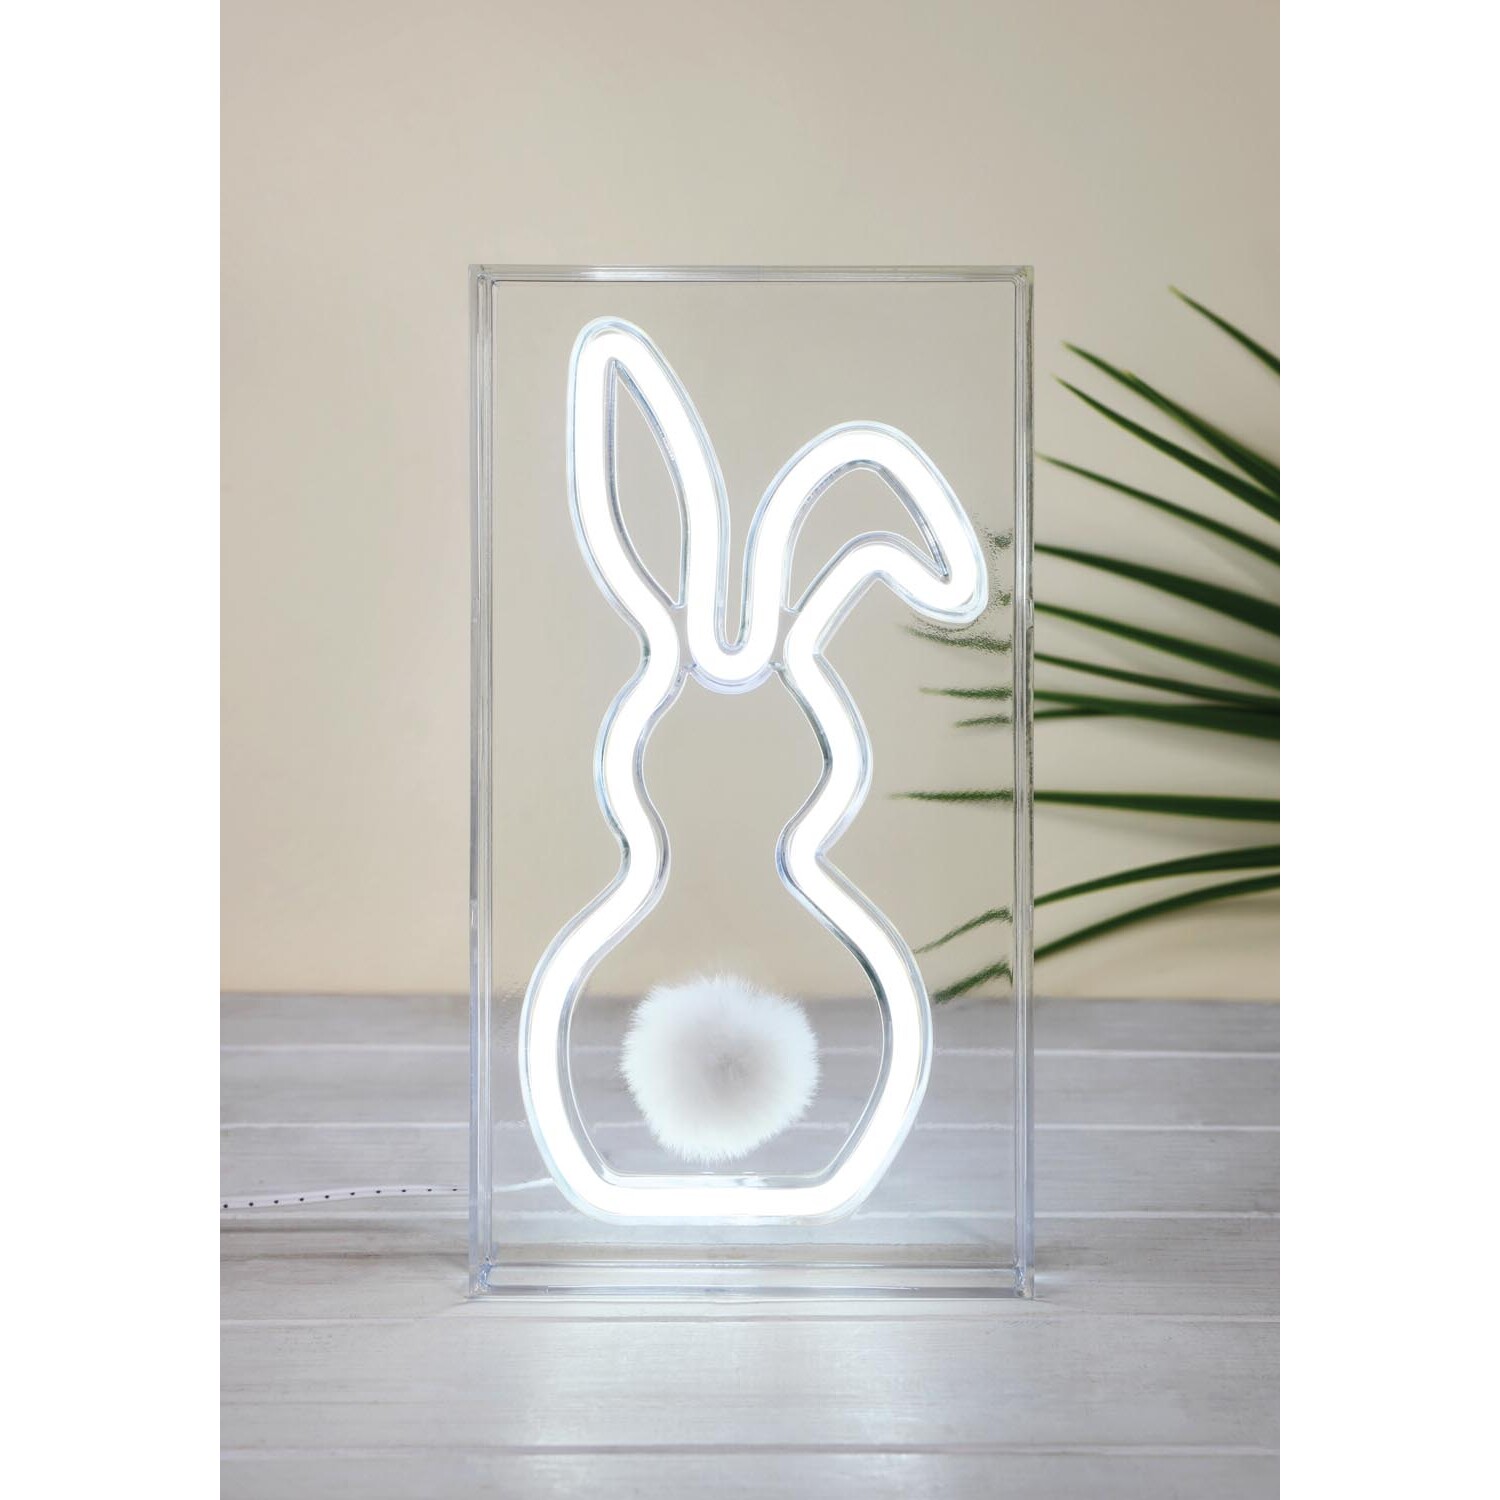 Neon Bunny Light - White Image 2